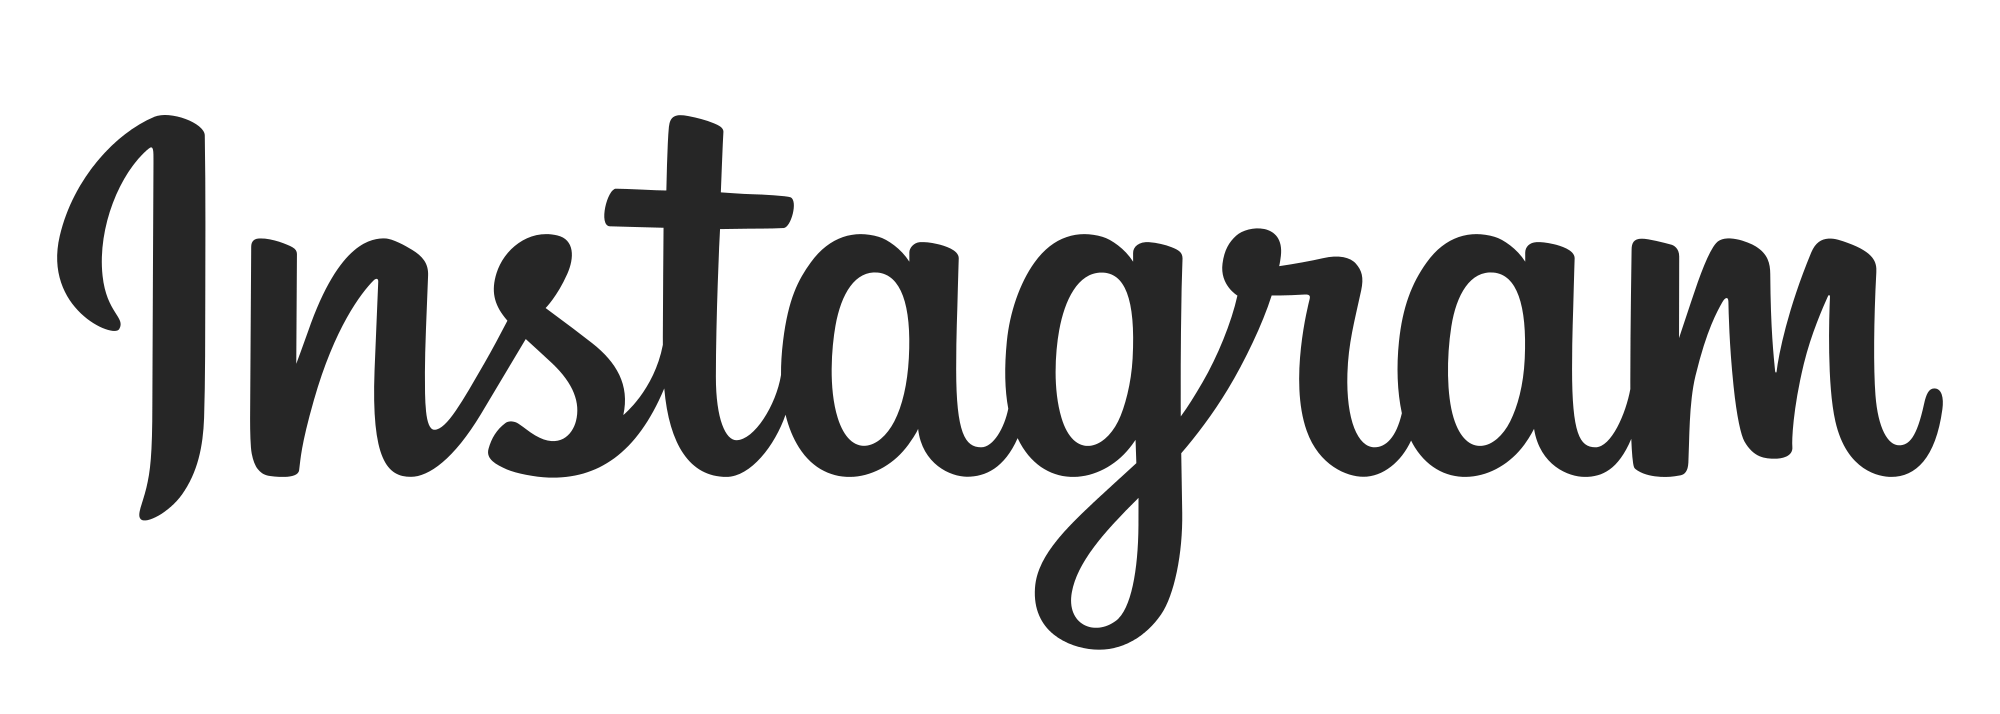 Instagram logo PNG image free Download 